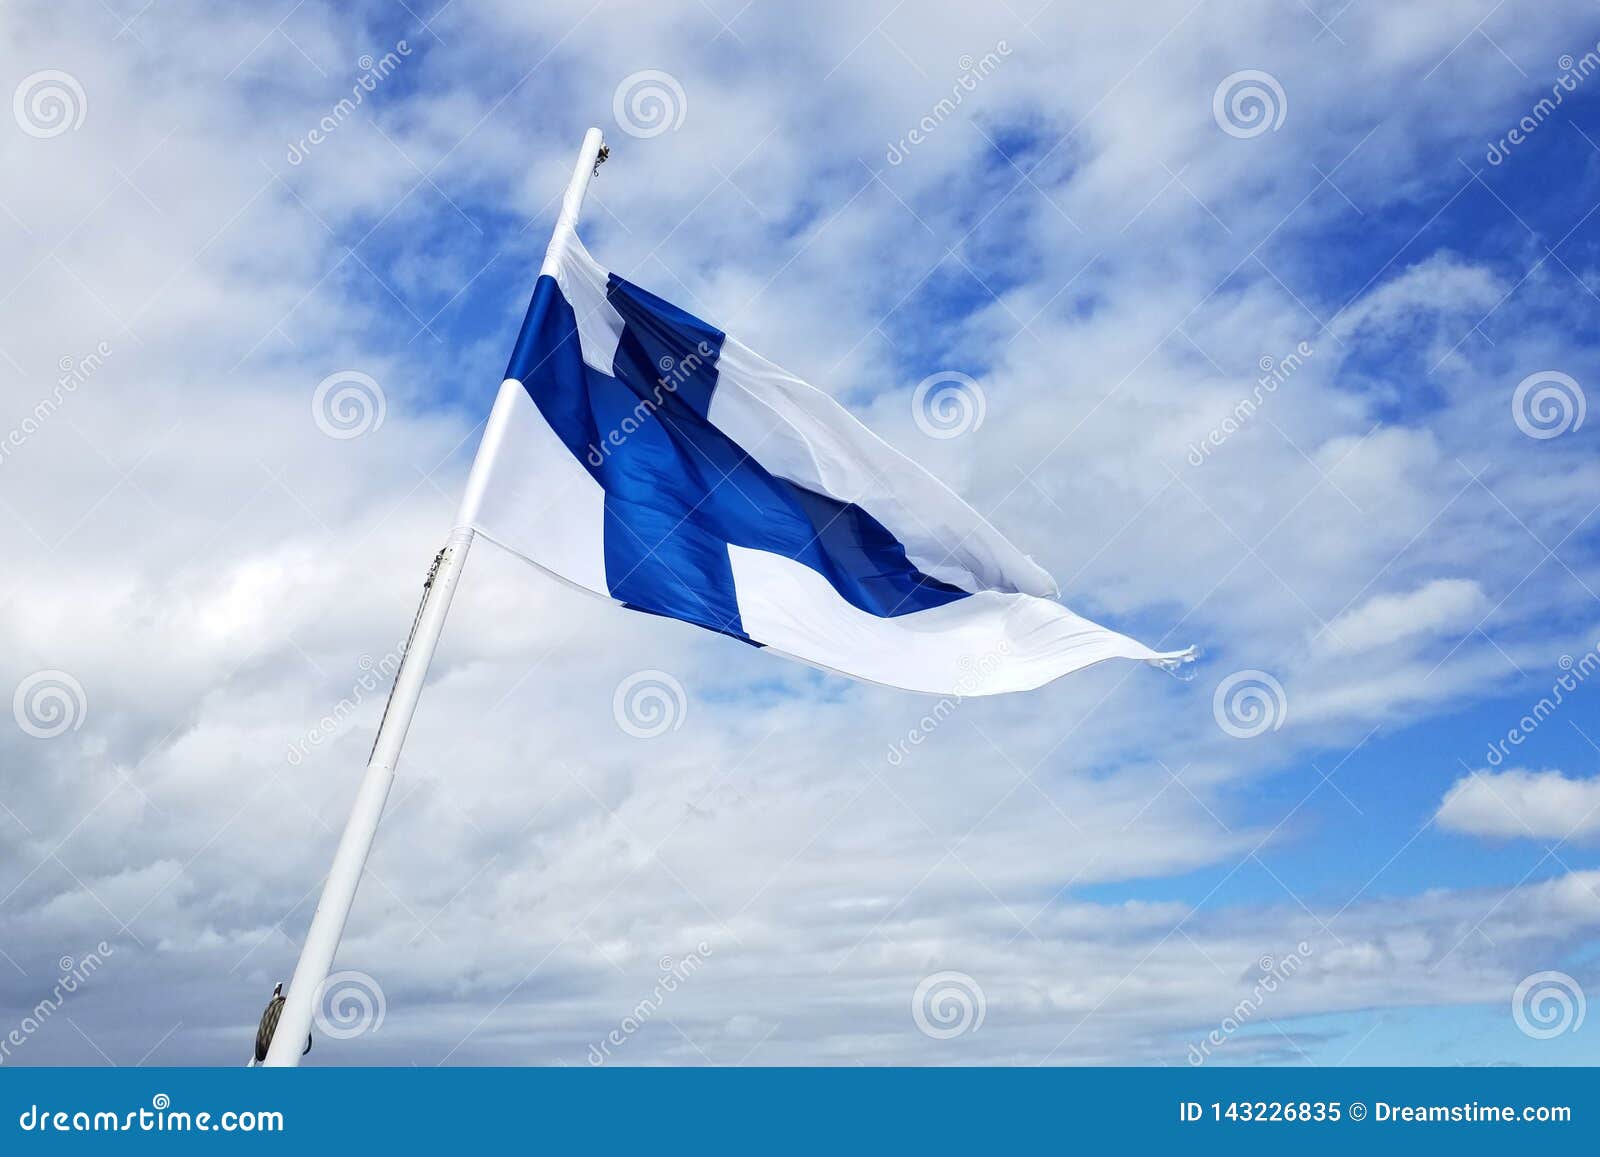 White Flag Blue Cross Blue Sky Background Stock Image - Image of pole, 143226835